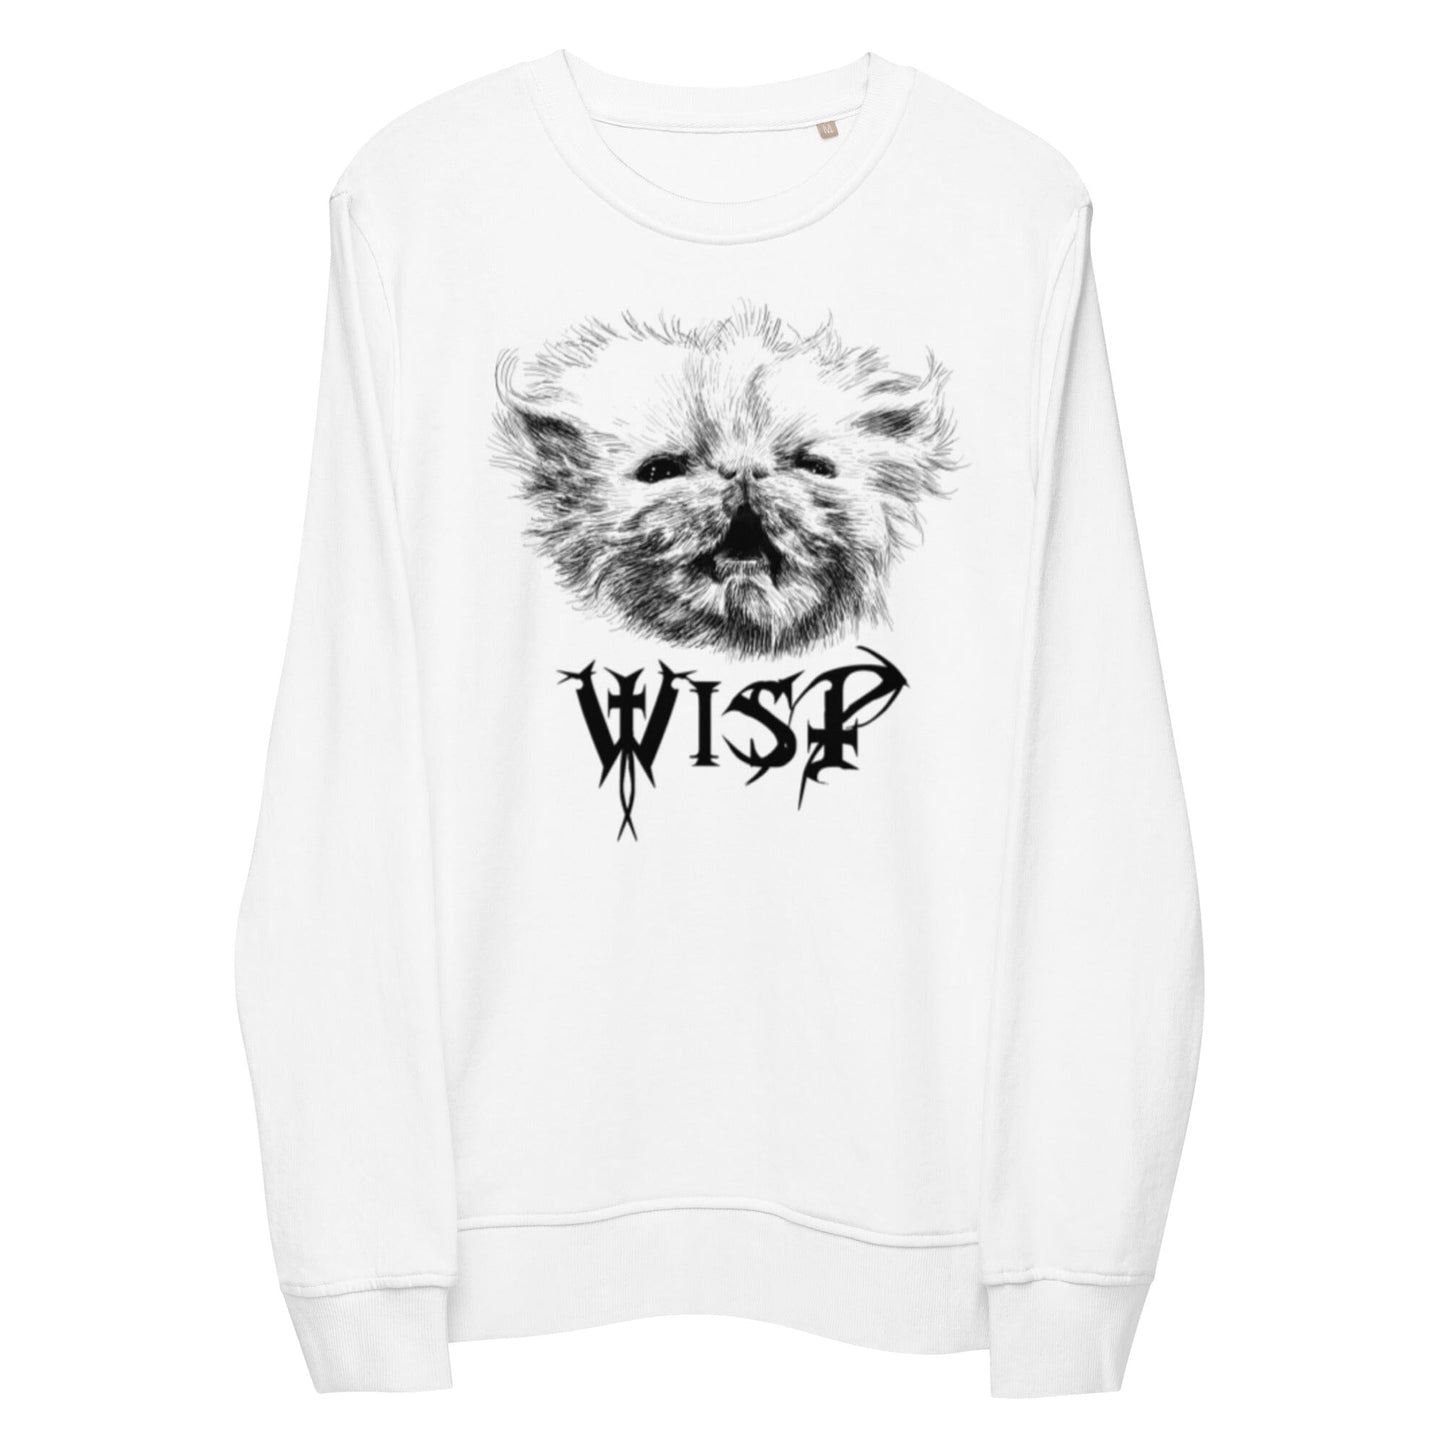 Metal Wisp Sweatshirt [Unfoiled] (All net proceeds go to Rags to Riches Animal Rescue) JoyousJoyfulJoyness White S 